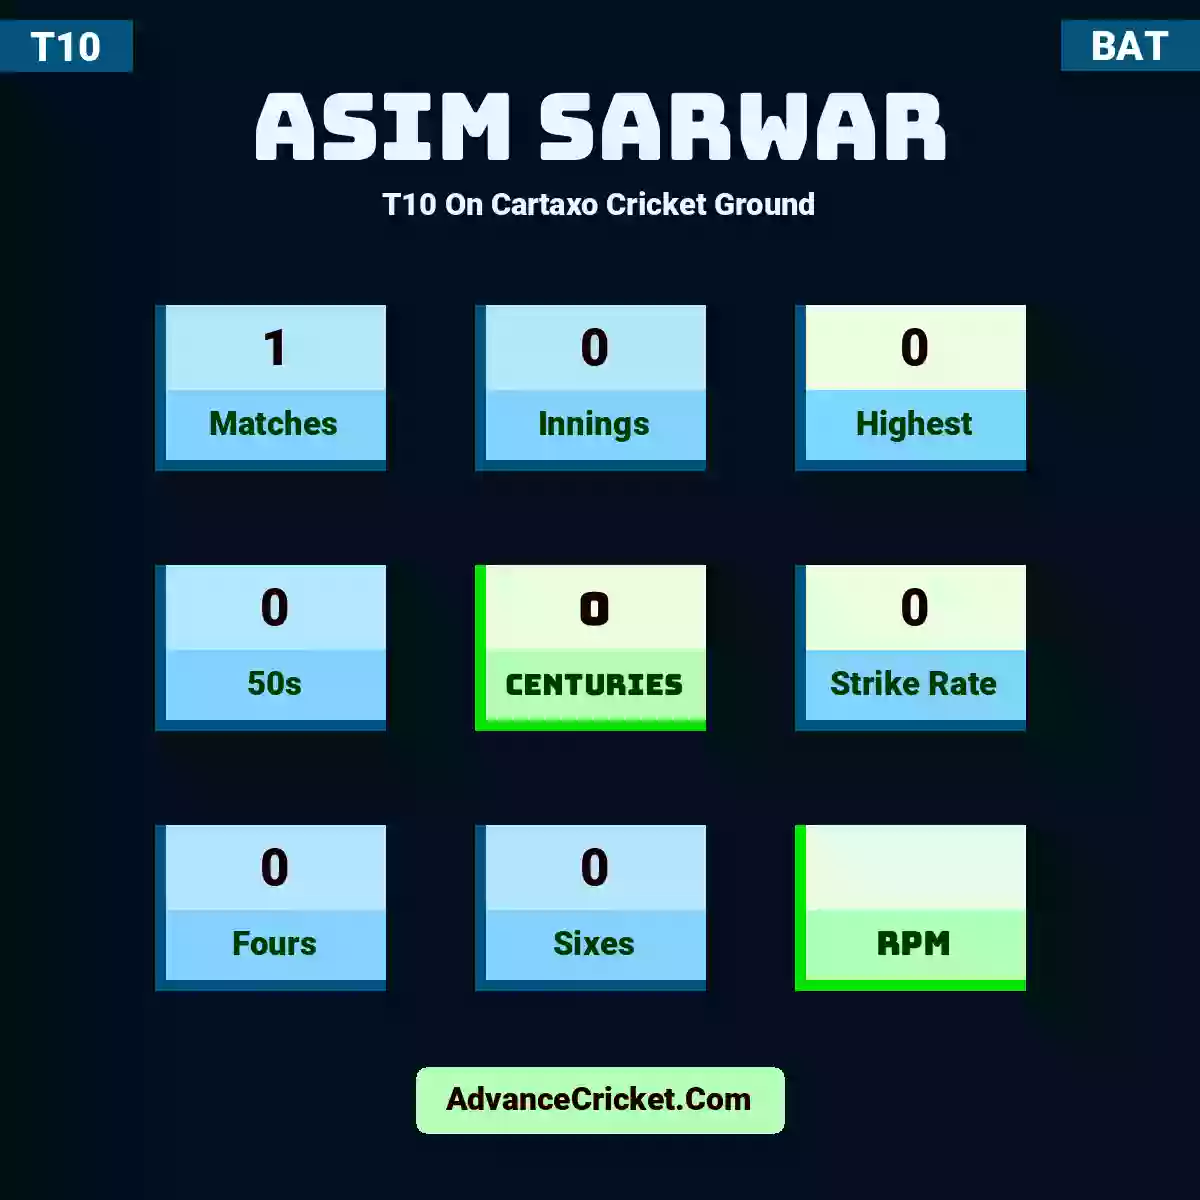 Asim Sarwar T10  On Cartaxo Cricket Ground, Asim Sarwar played 1 matches, scored 0 runs as highest, 0 half-centuries, and 0 centuries, with a strike rate of 0. A.Sarwar hit 0 fours and 0 sixes.